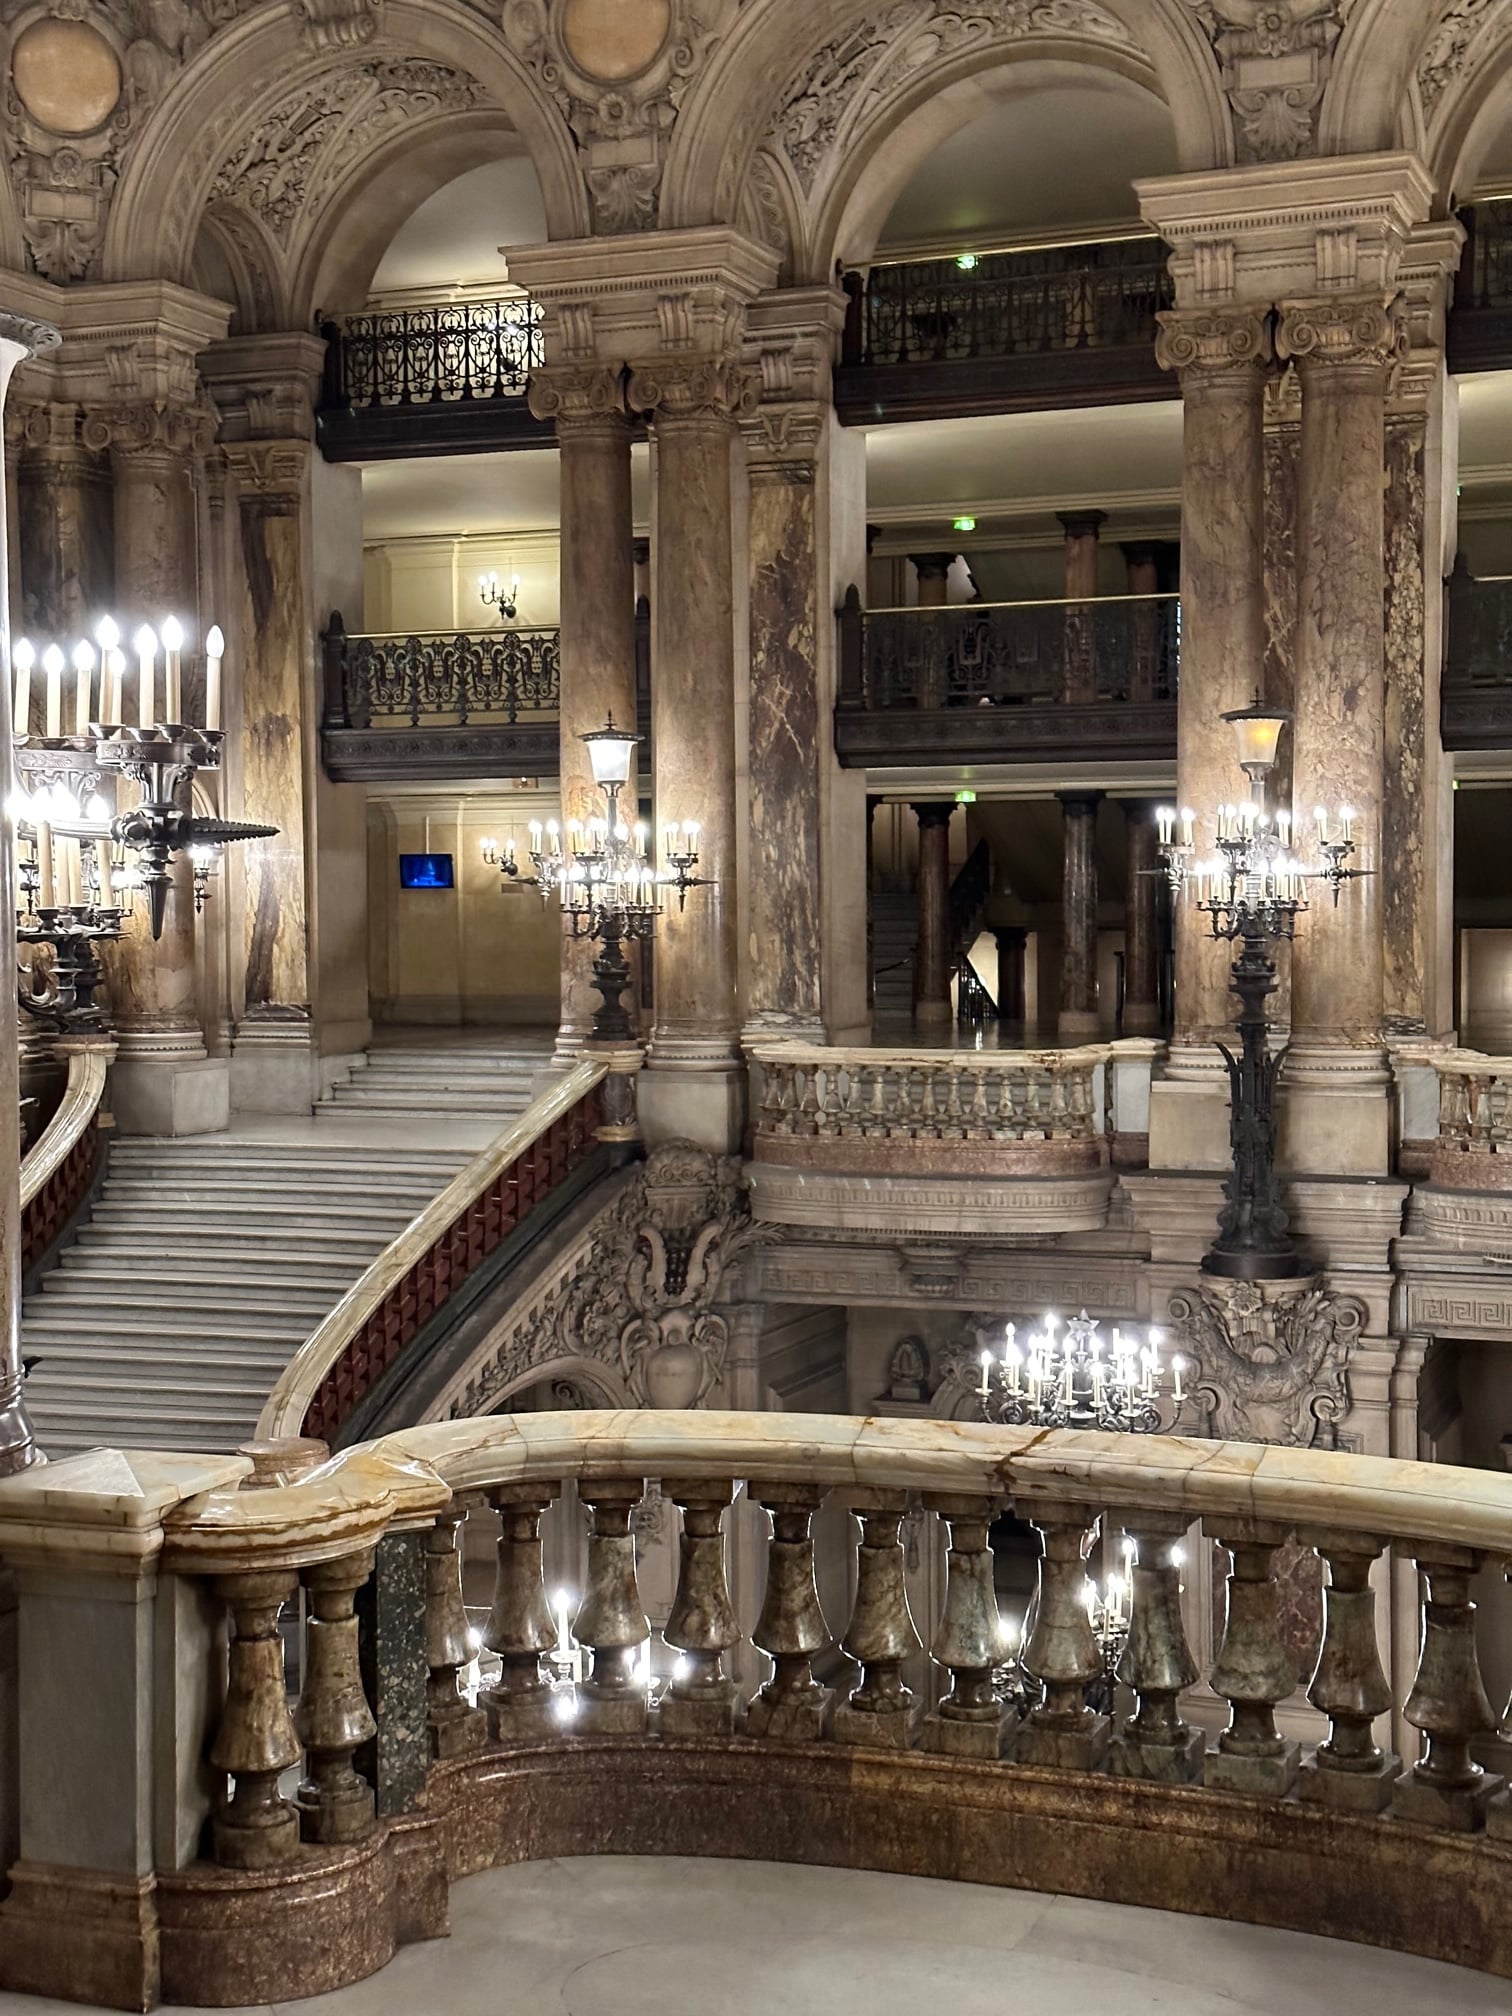 Inside the Opéra Garnier in Paris.